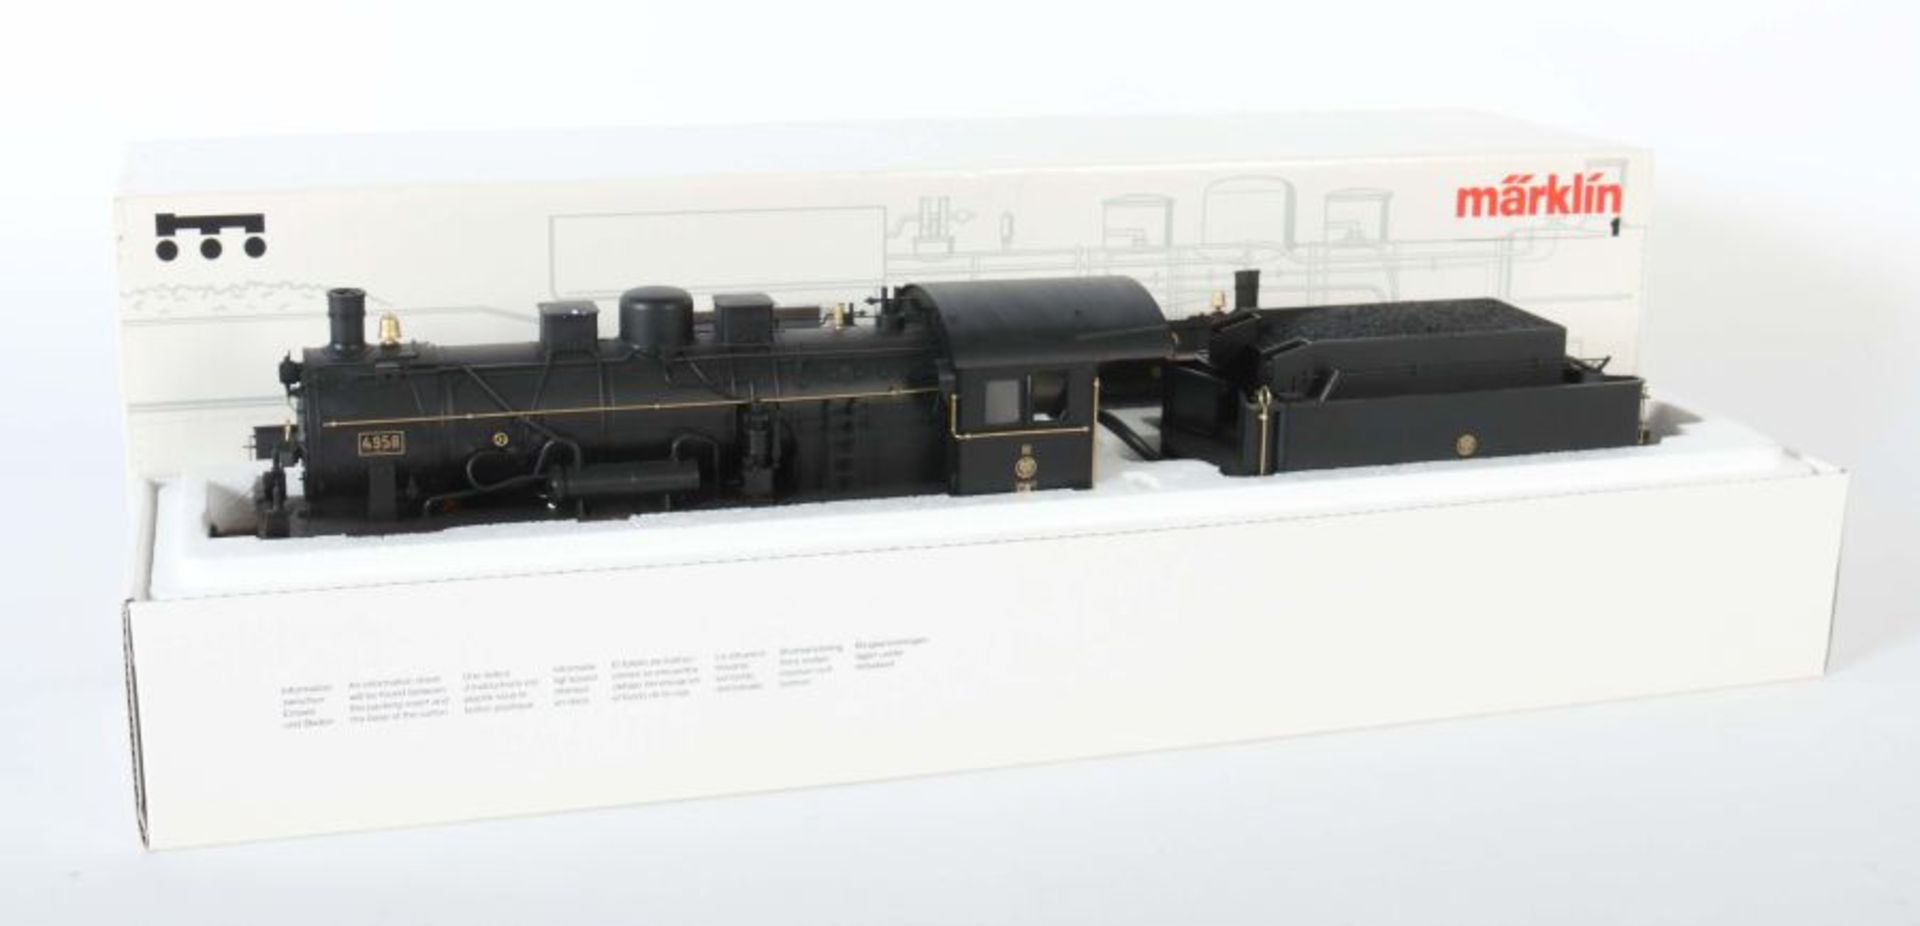 Schlepptender-Lokomotive Märklin, Modellnr. 5508, Spur 1, Replika, 4-achsige Lokomotive mit 3- - Bild 2 aus 2